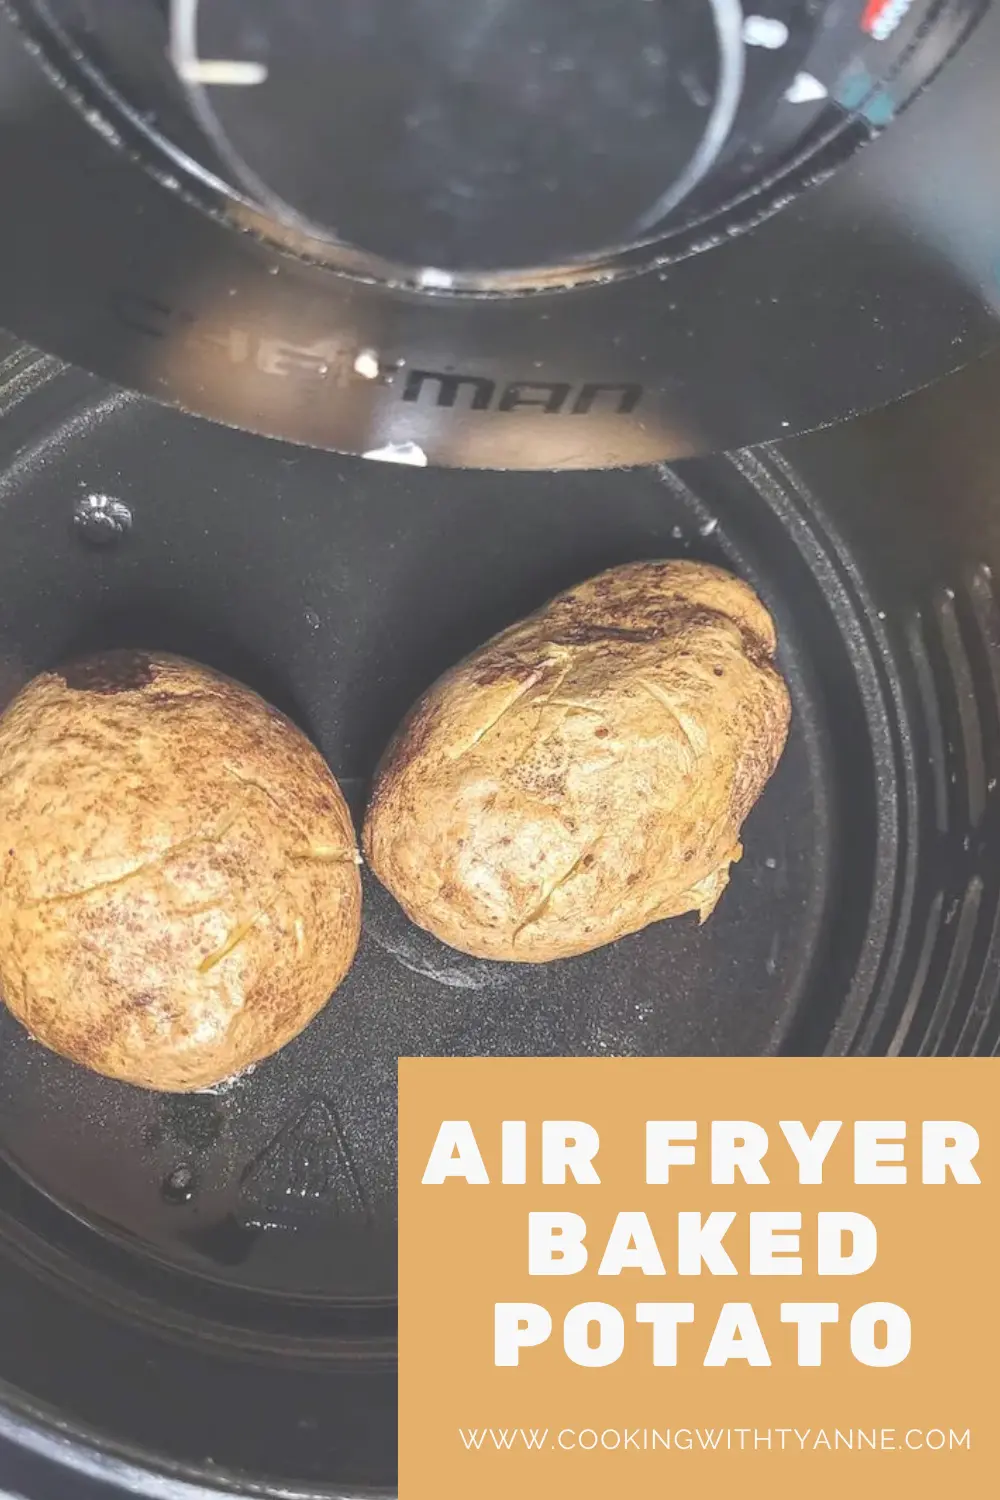 Air fryer baked potato pinterest image.